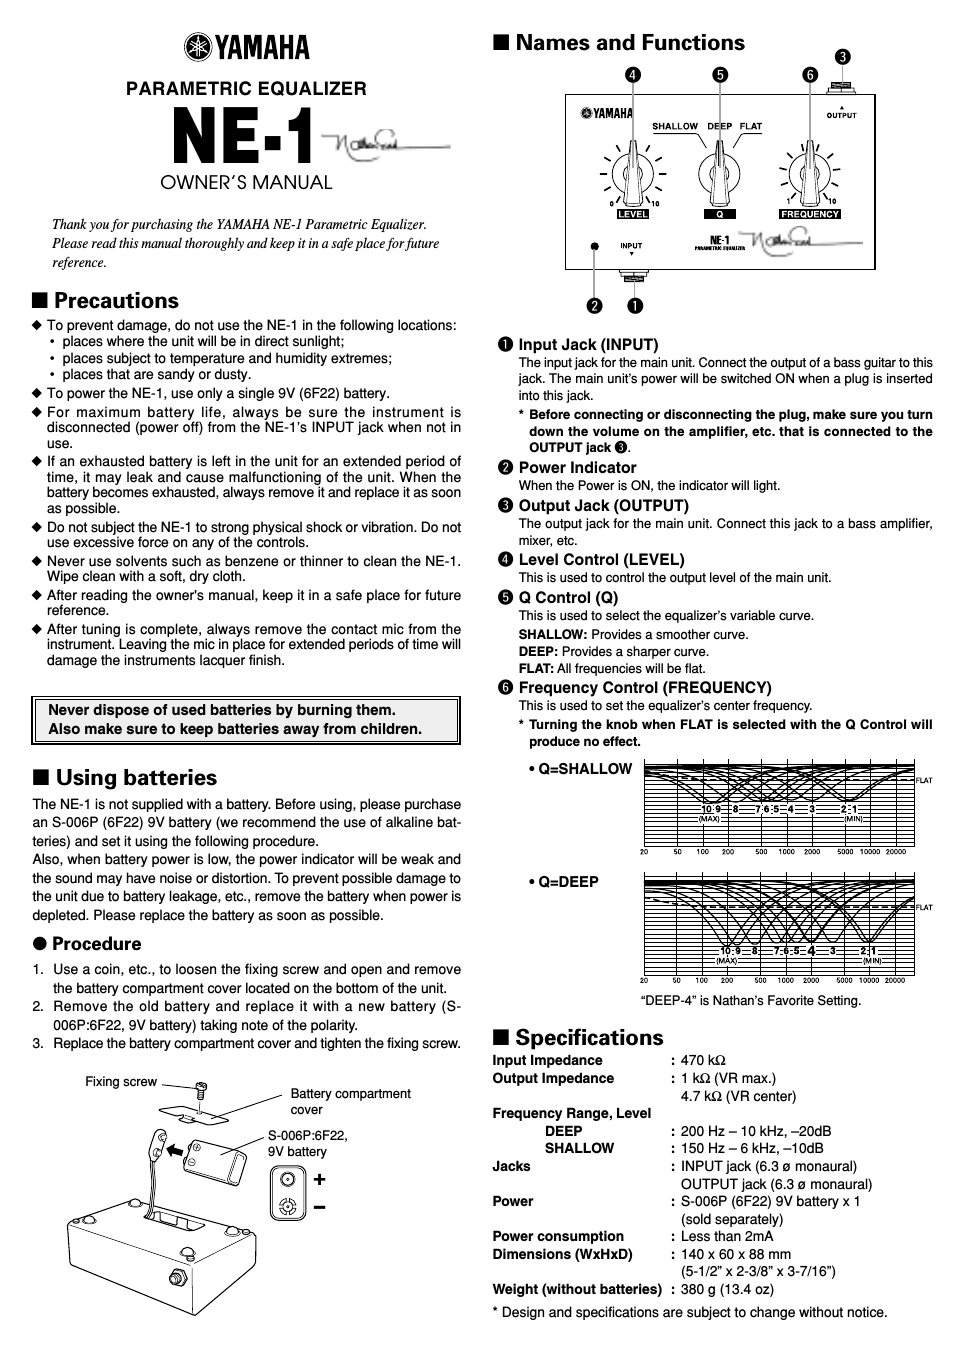 Parametric Equalizer NE-1 (Page 1)